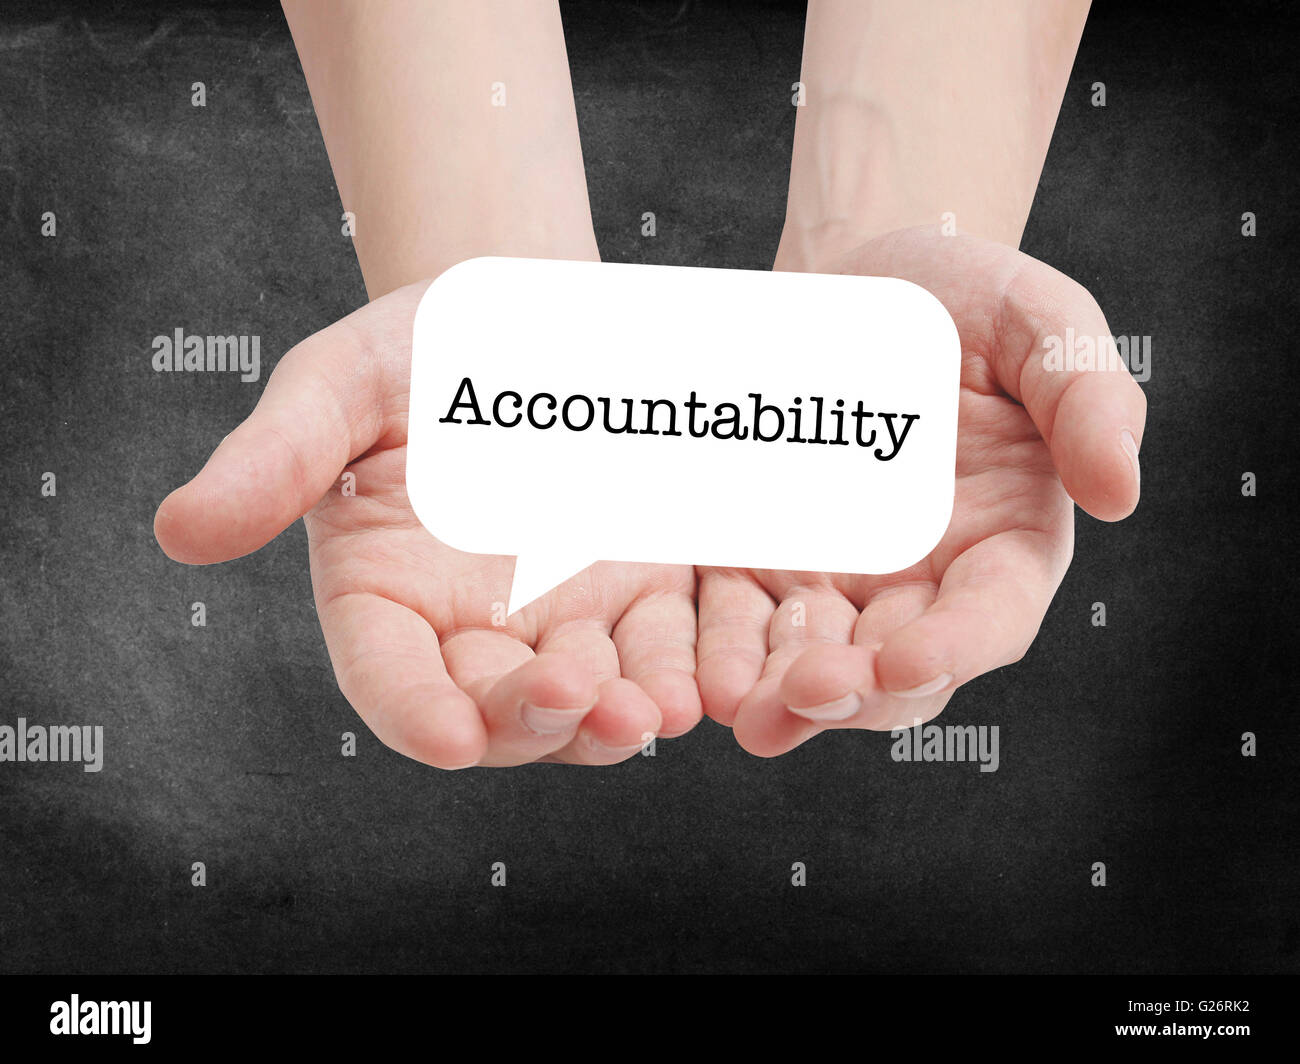 Accountability written on a speechbubble Stock Photo